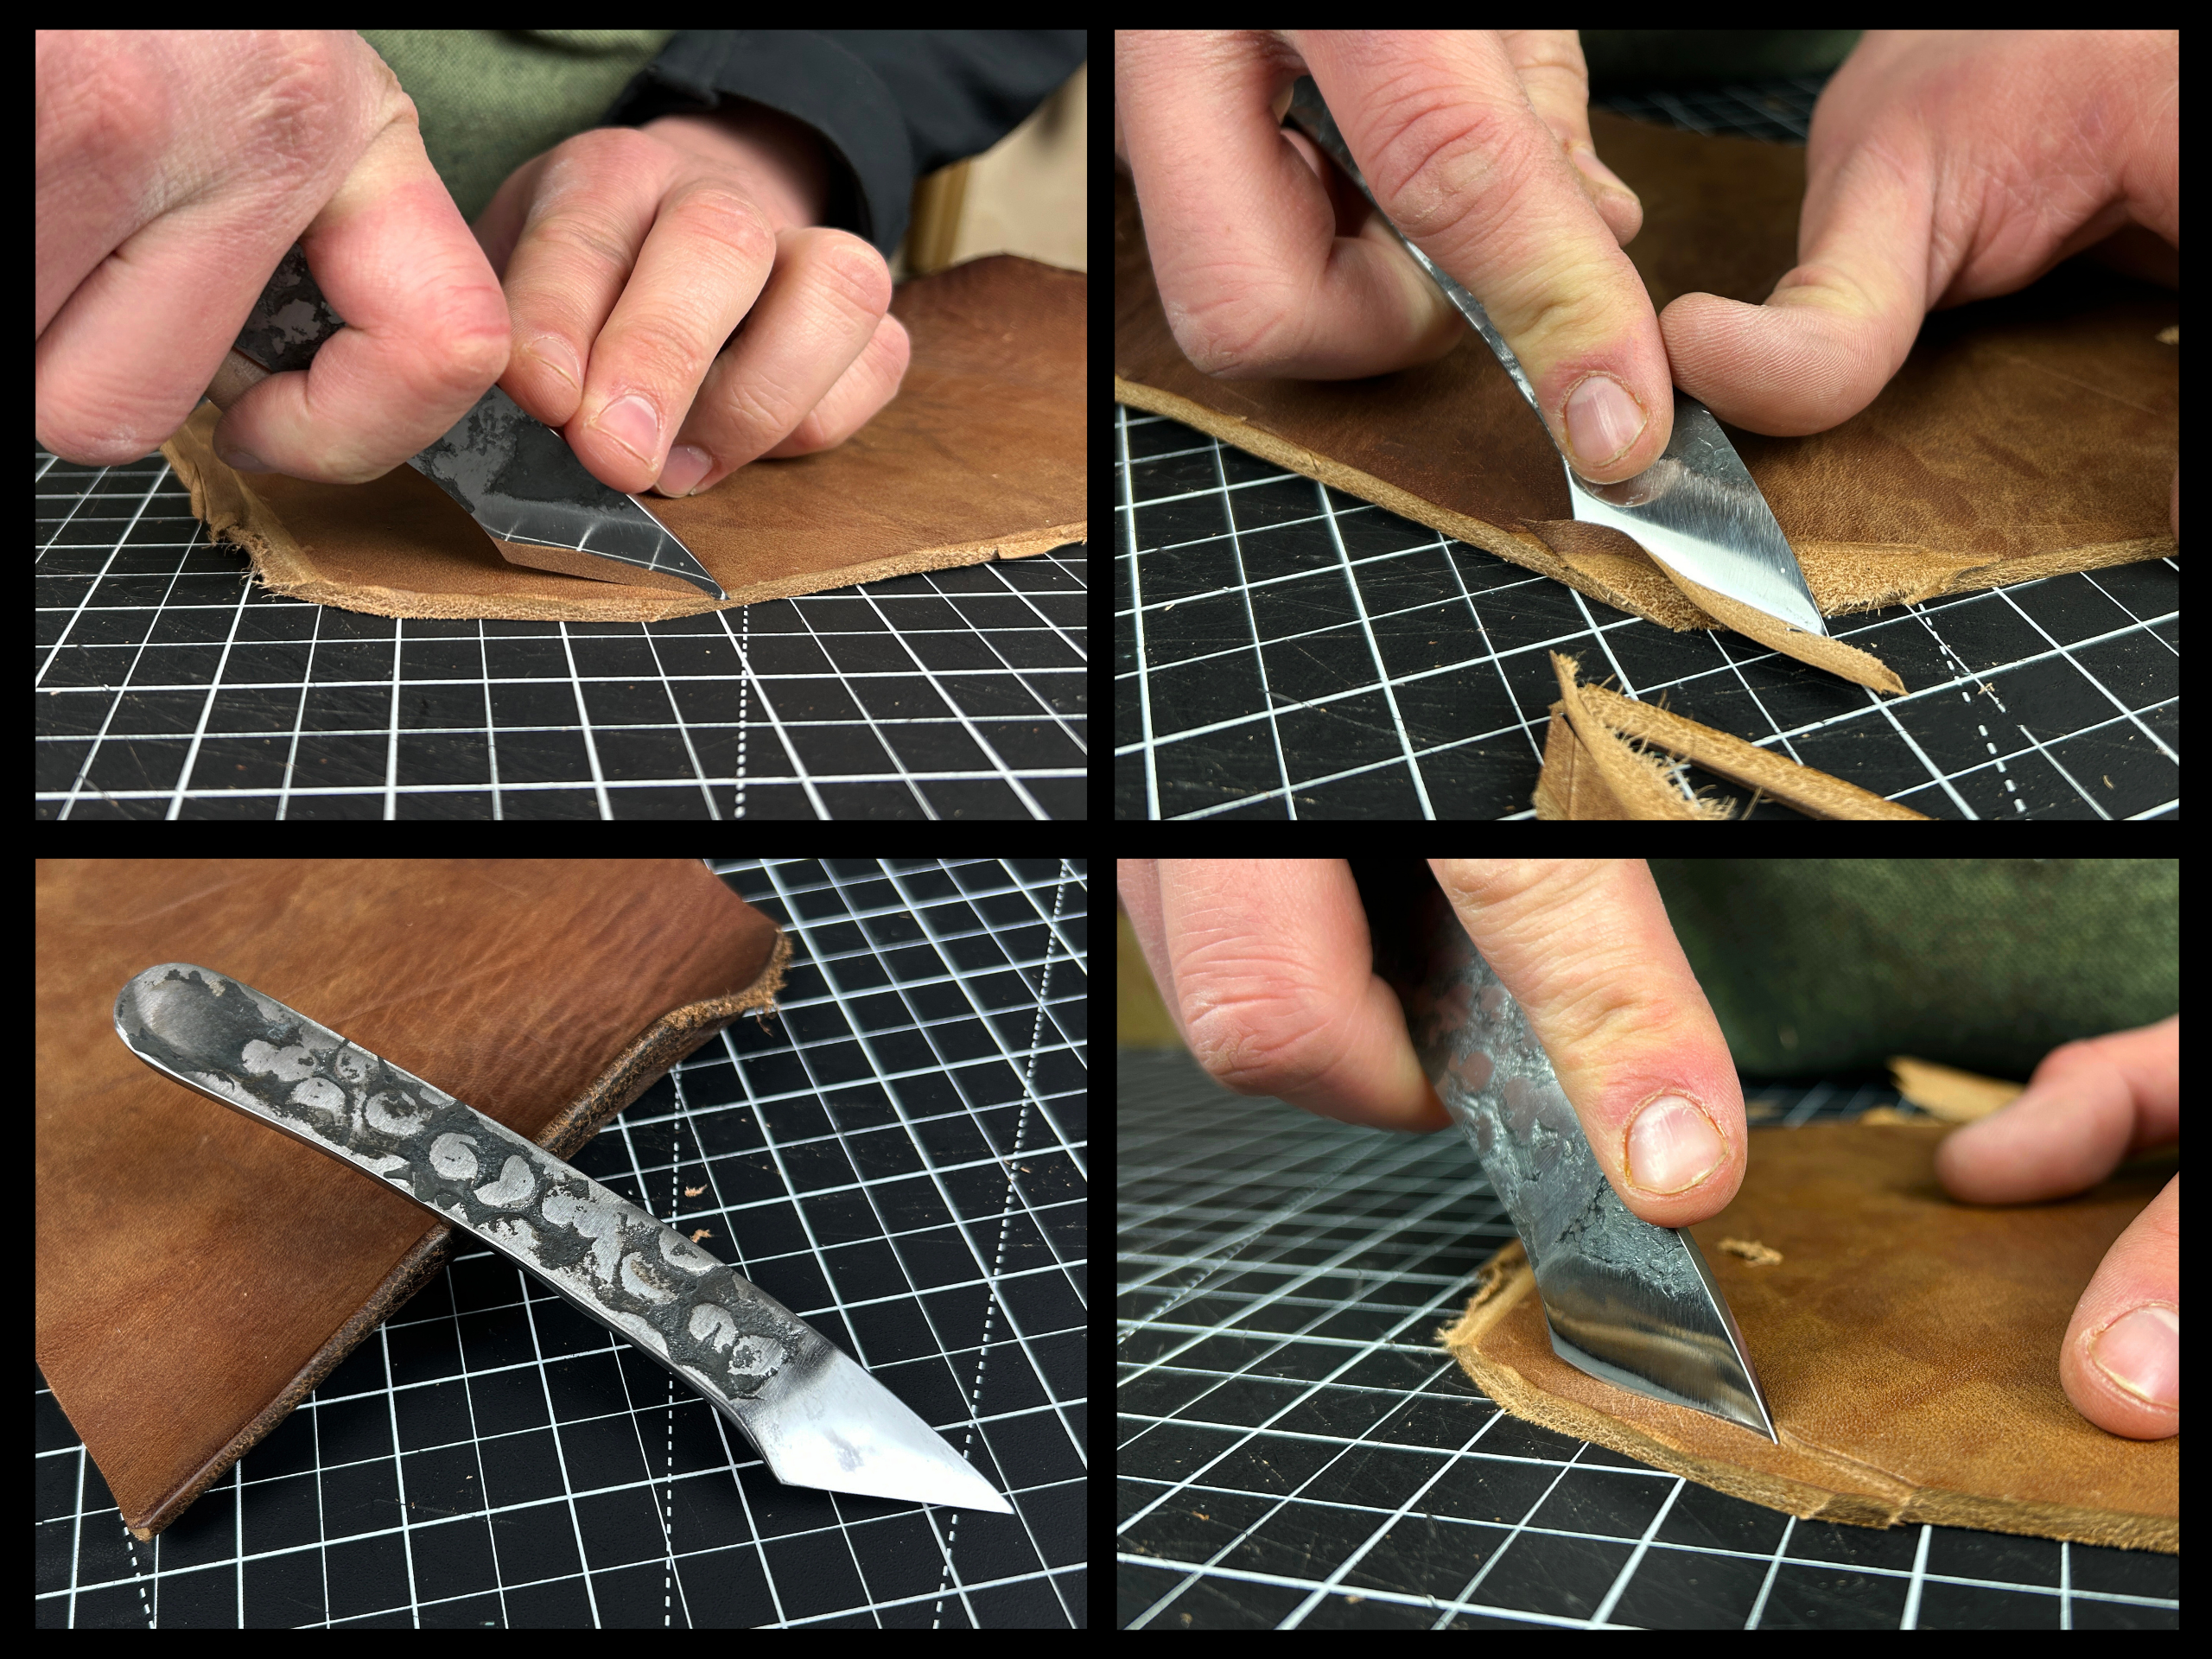 Hand-Forged Marking Knife Kiridashi, 5.5 cm (2.1 inches)